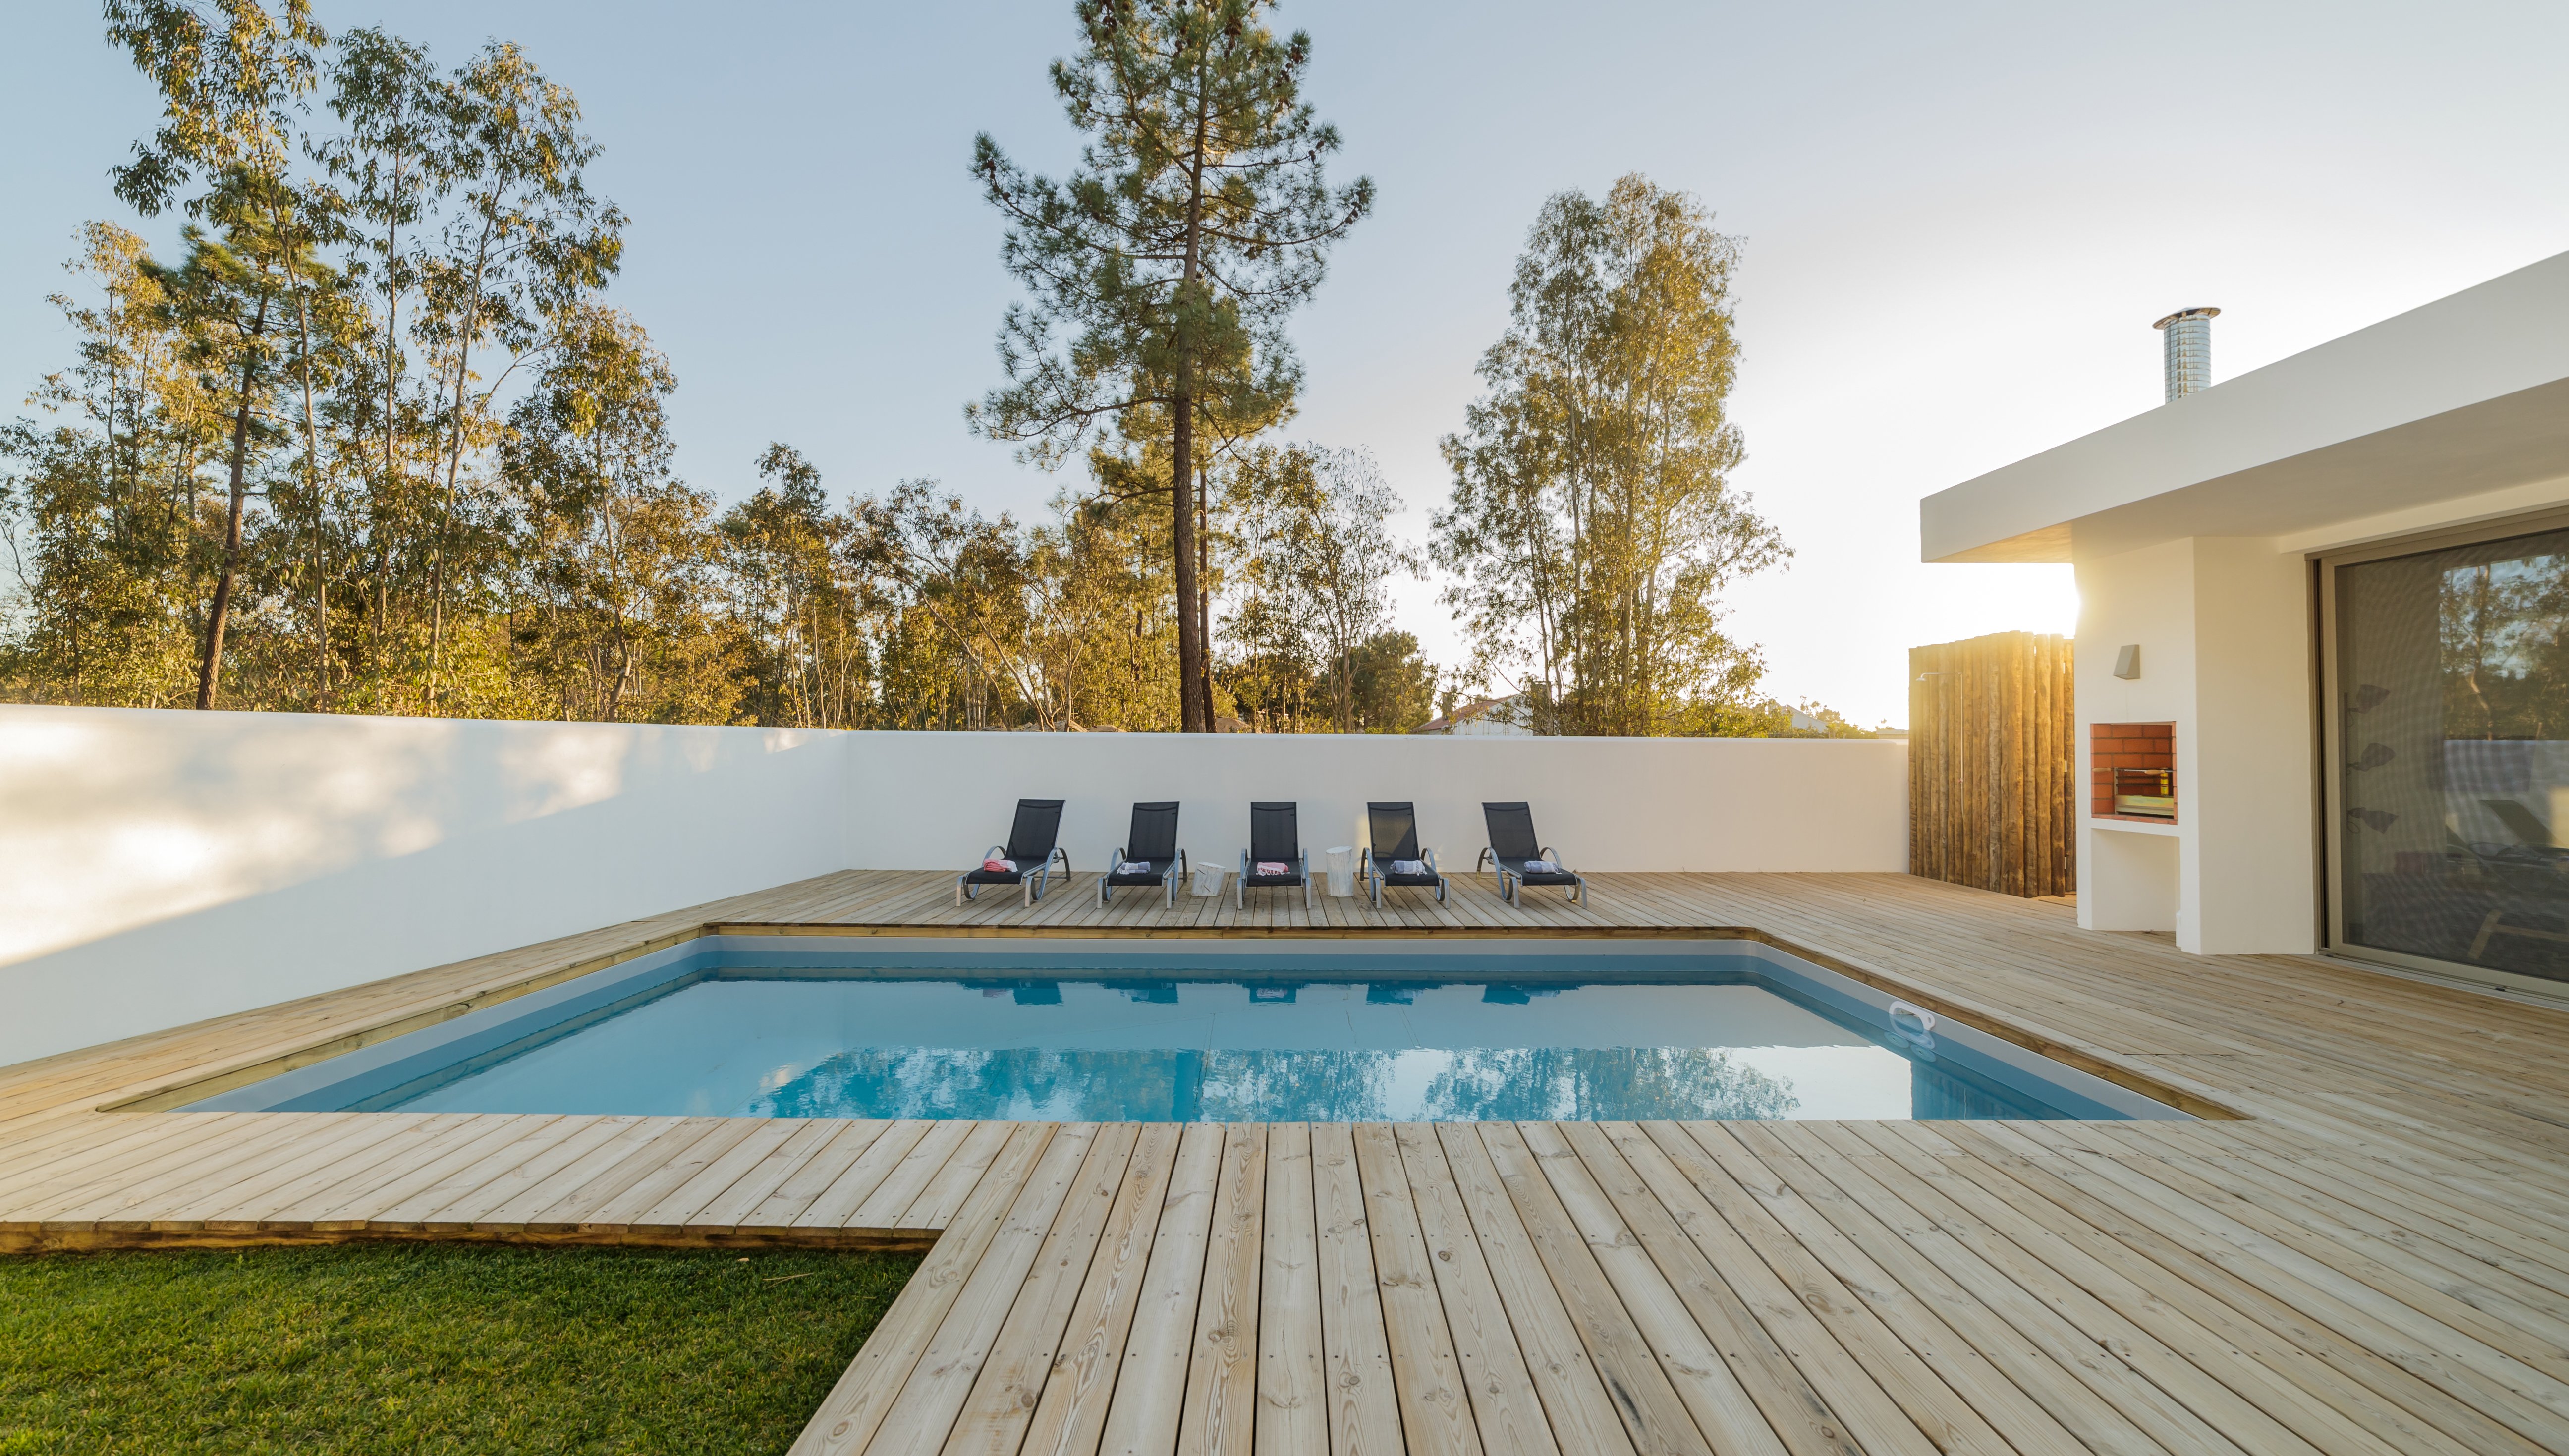 Inground Swimming Pools Cost, Wood Deck Around Inground Pool